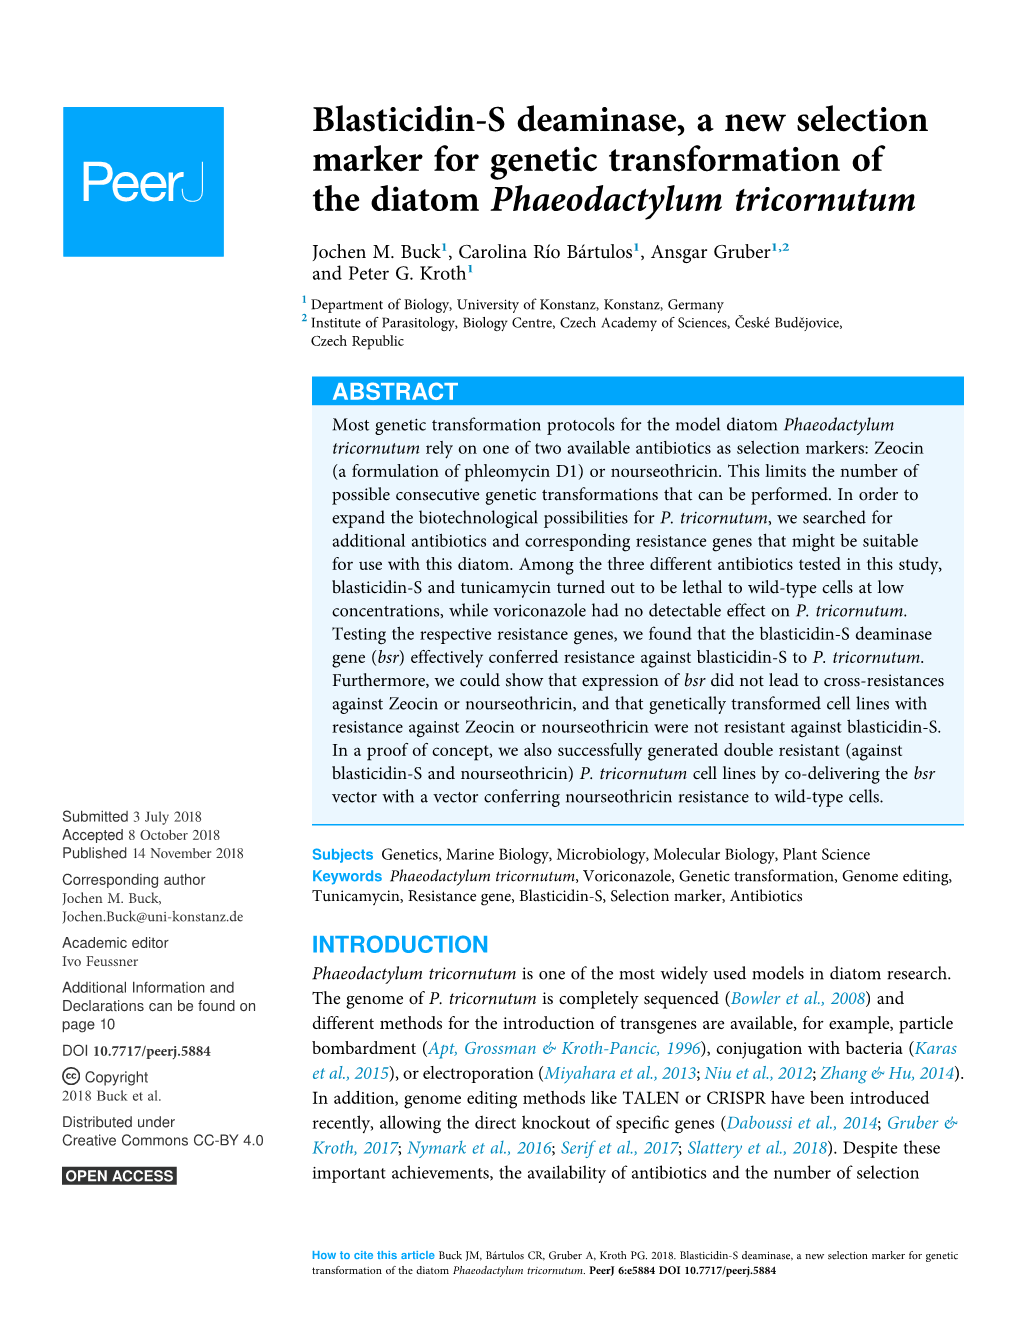 Blasticidin-S Deaminase, a New Selection Marker for Genetic Transformation of the Diatom Phaeodactylum Tricornutum